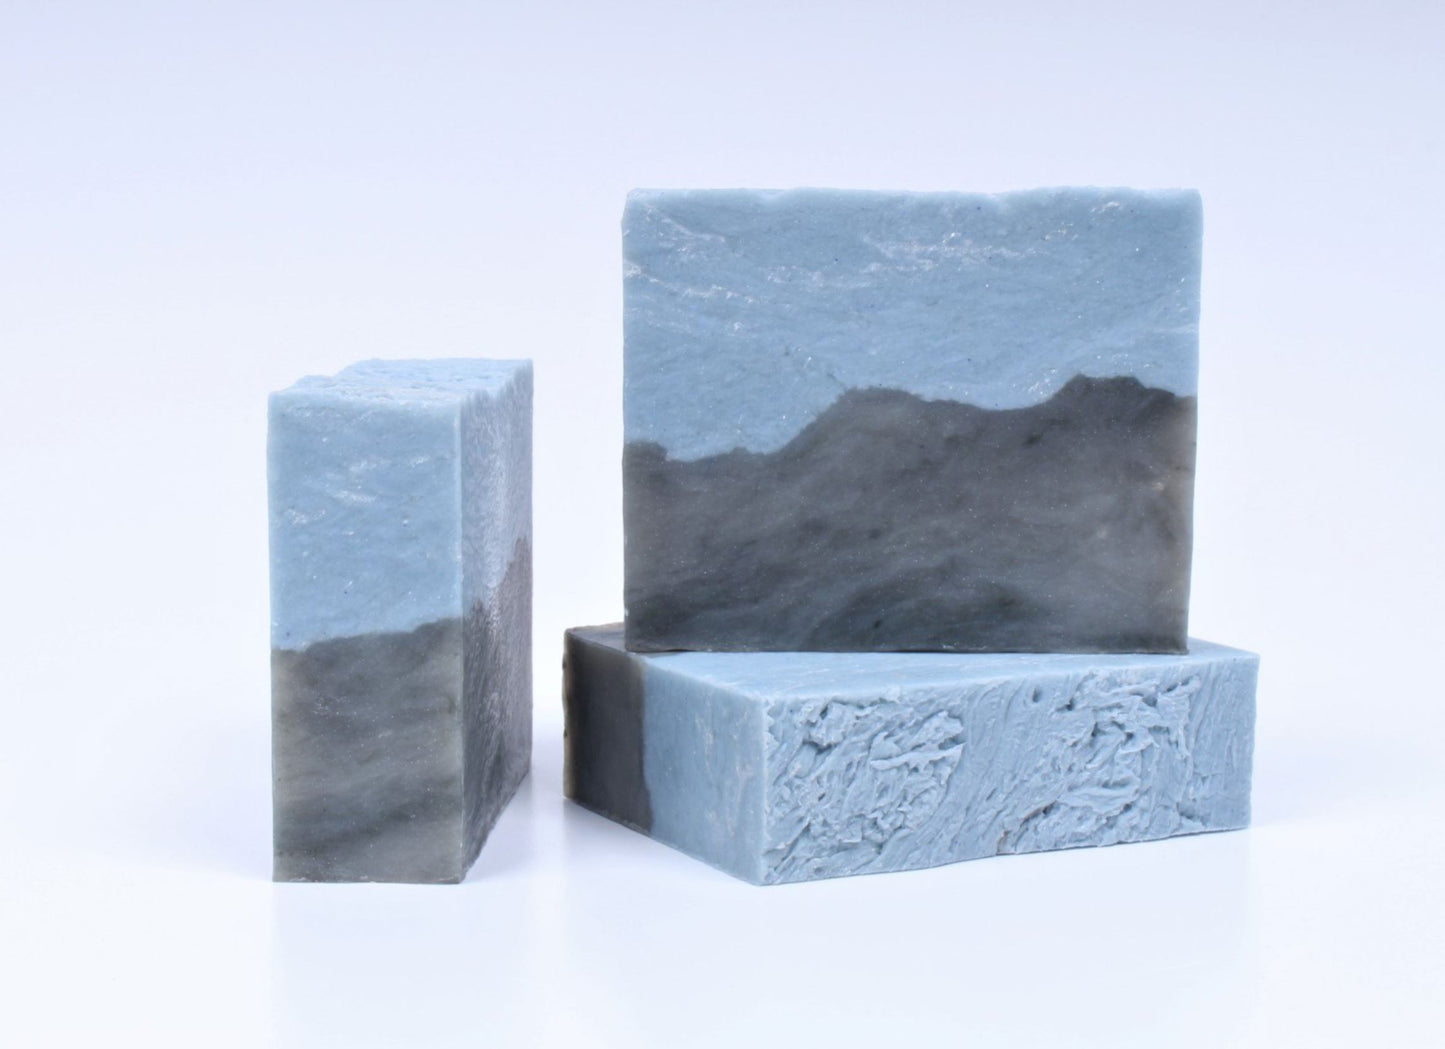 Hidden Gorge - Cold Press Bar Soap